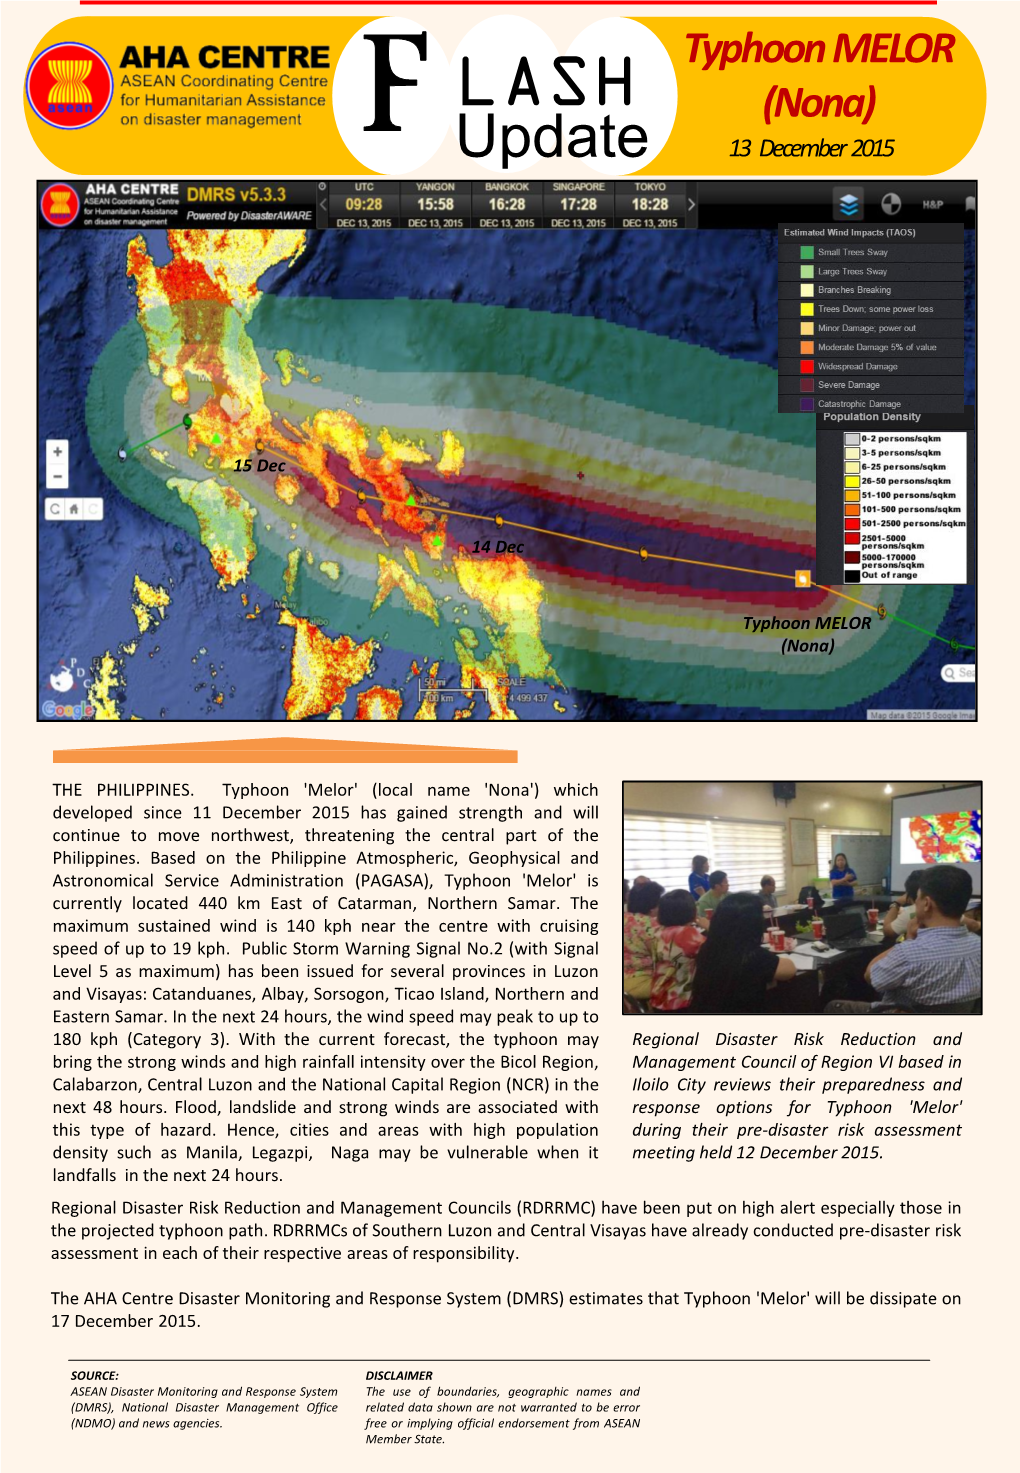 Typhoon MELOR LASH Typhoon ATSANI 4.6 M – 12 Dec 2006 (Nona) Update 13 December 2015 5.9 M – 22 Apr 1983 F